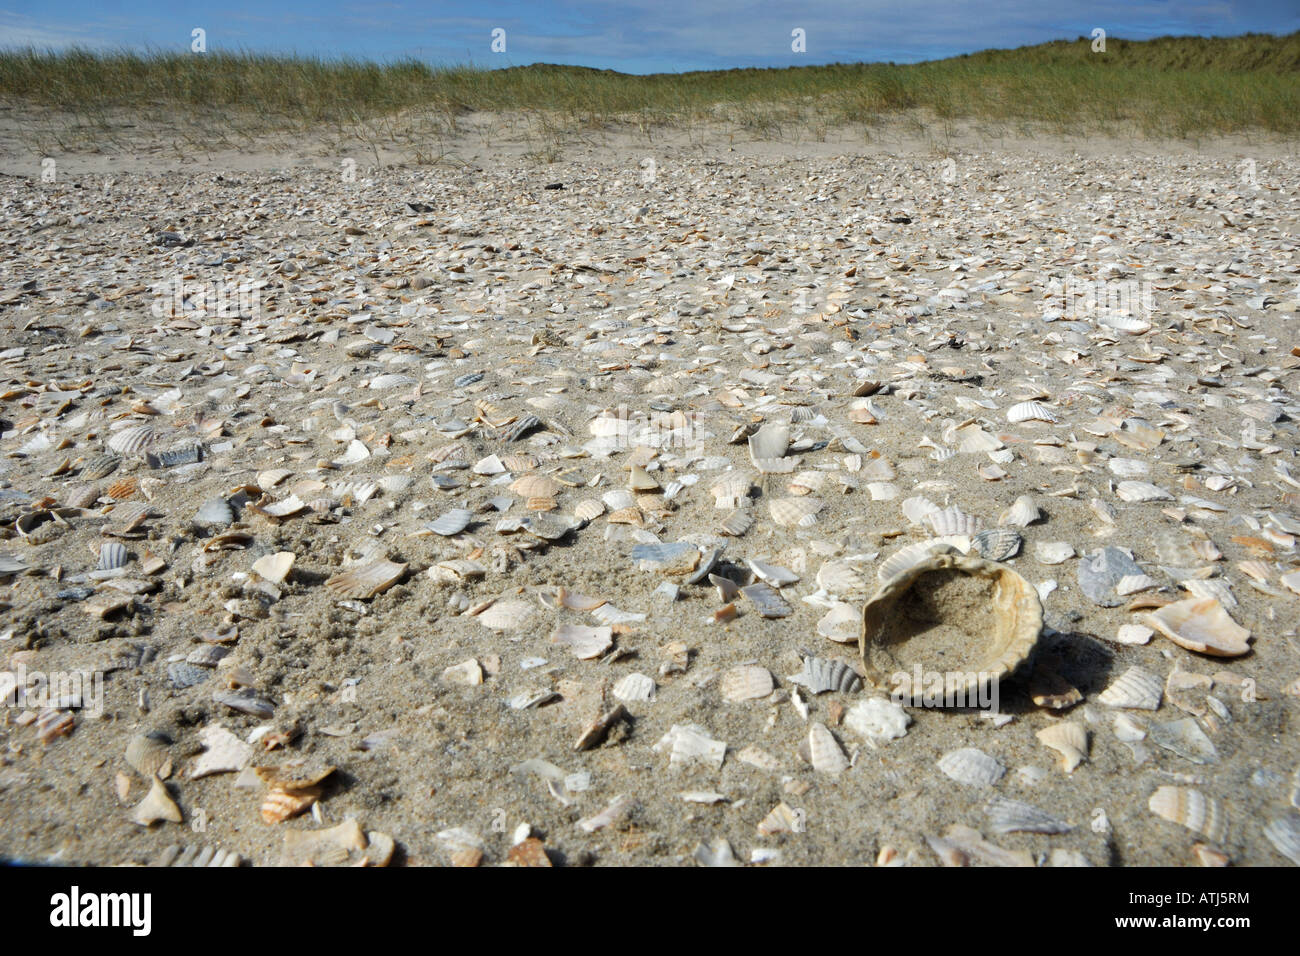 conchiglie shells beach seashore spiaggia battigia lamellibranchi dune reserve Riserva De Slufter Texel Olanda Stock Photo